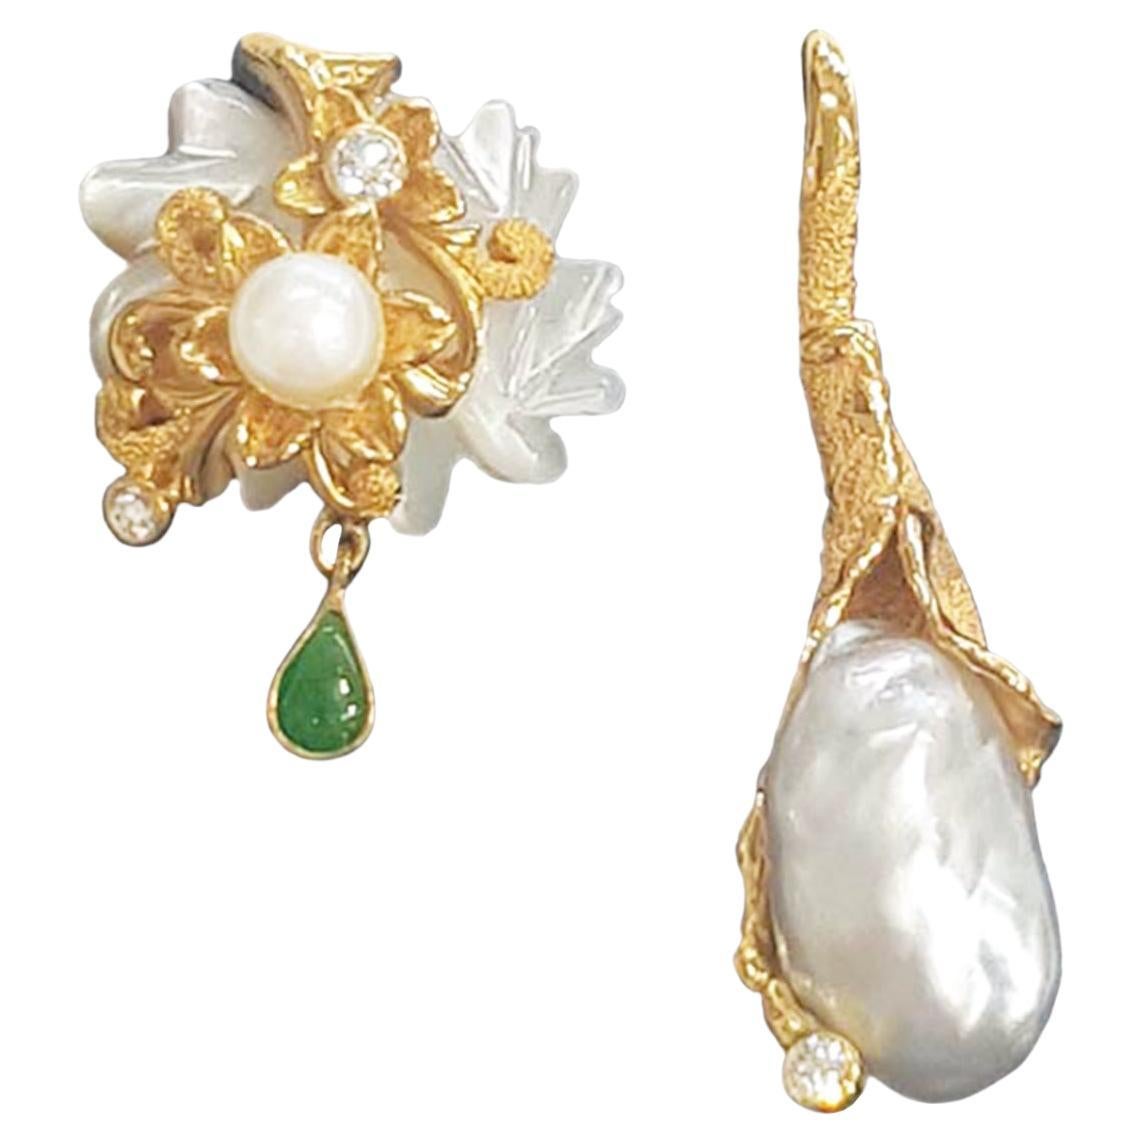 Paul Amey Offset Gold, Pearl, Diamond and Jade Diamond Earrings